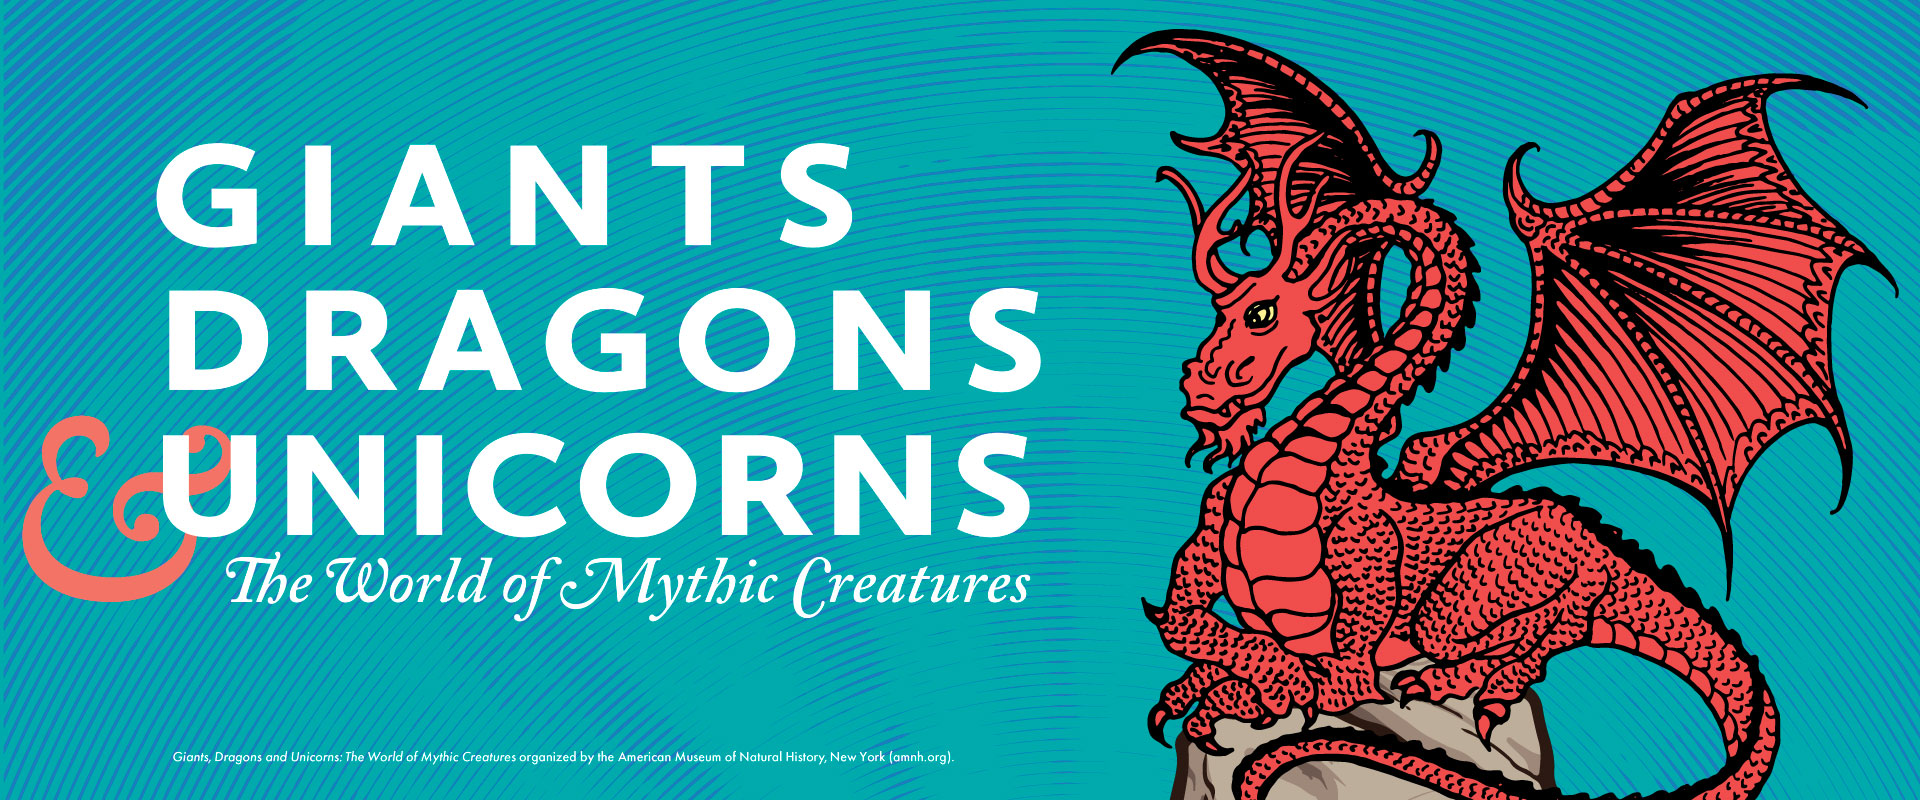 Giants, Dragon, Unicorns: The World of Mythic Creatures